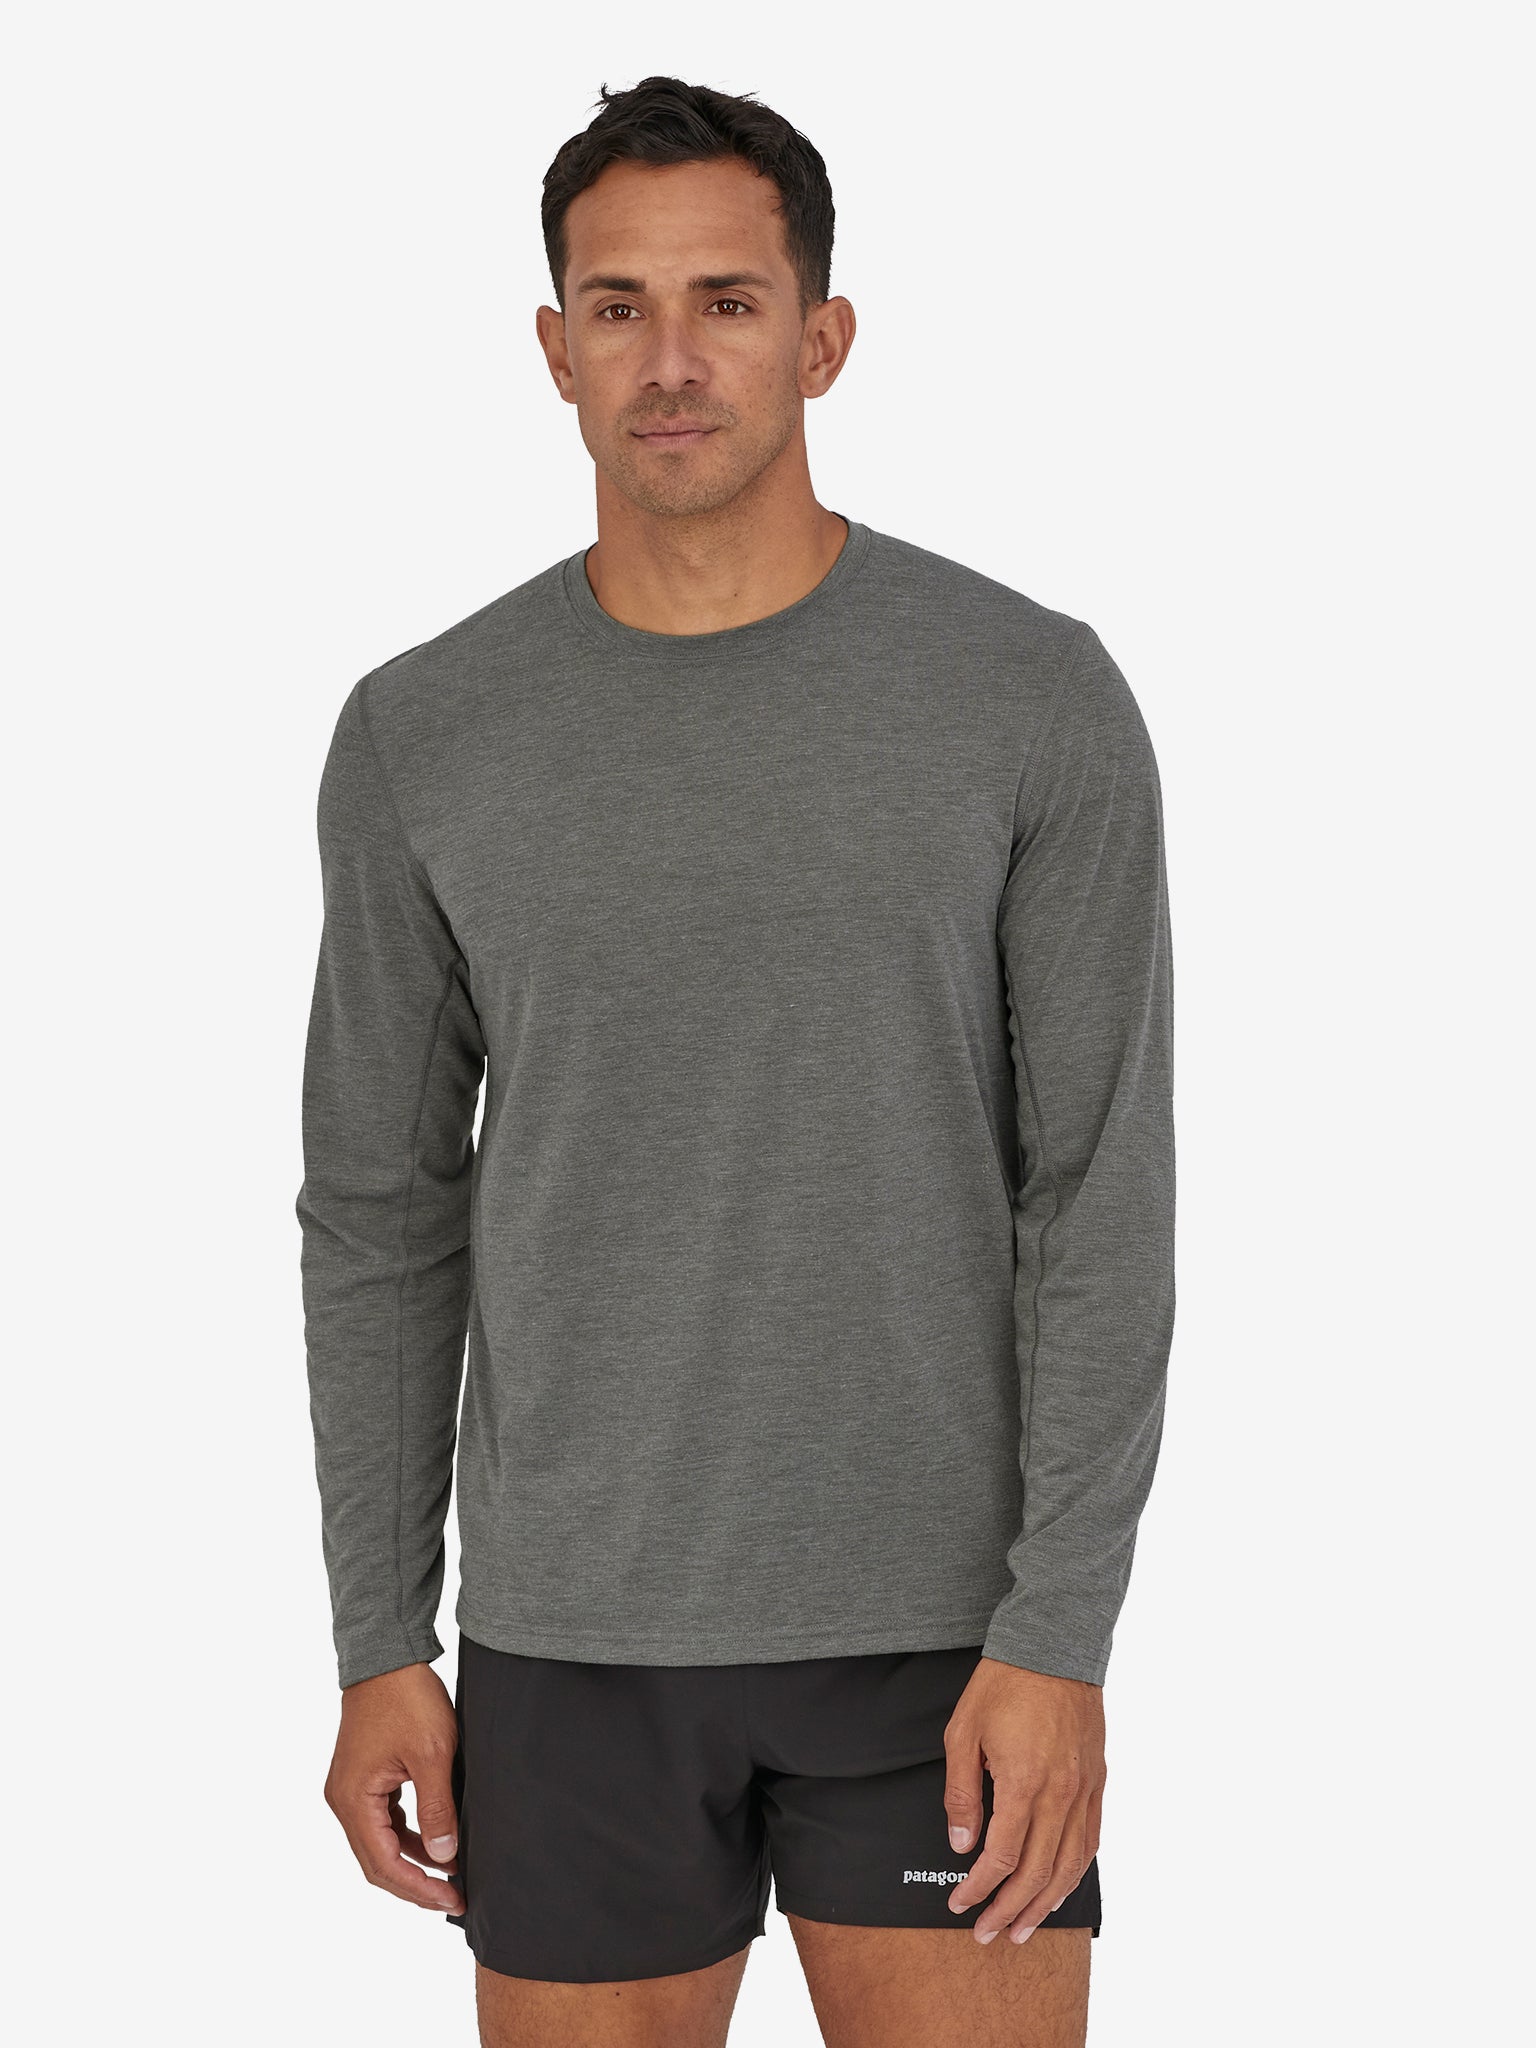 Patagonia Long Sleeve Cap Cool Trail Shirt - Forge Grey